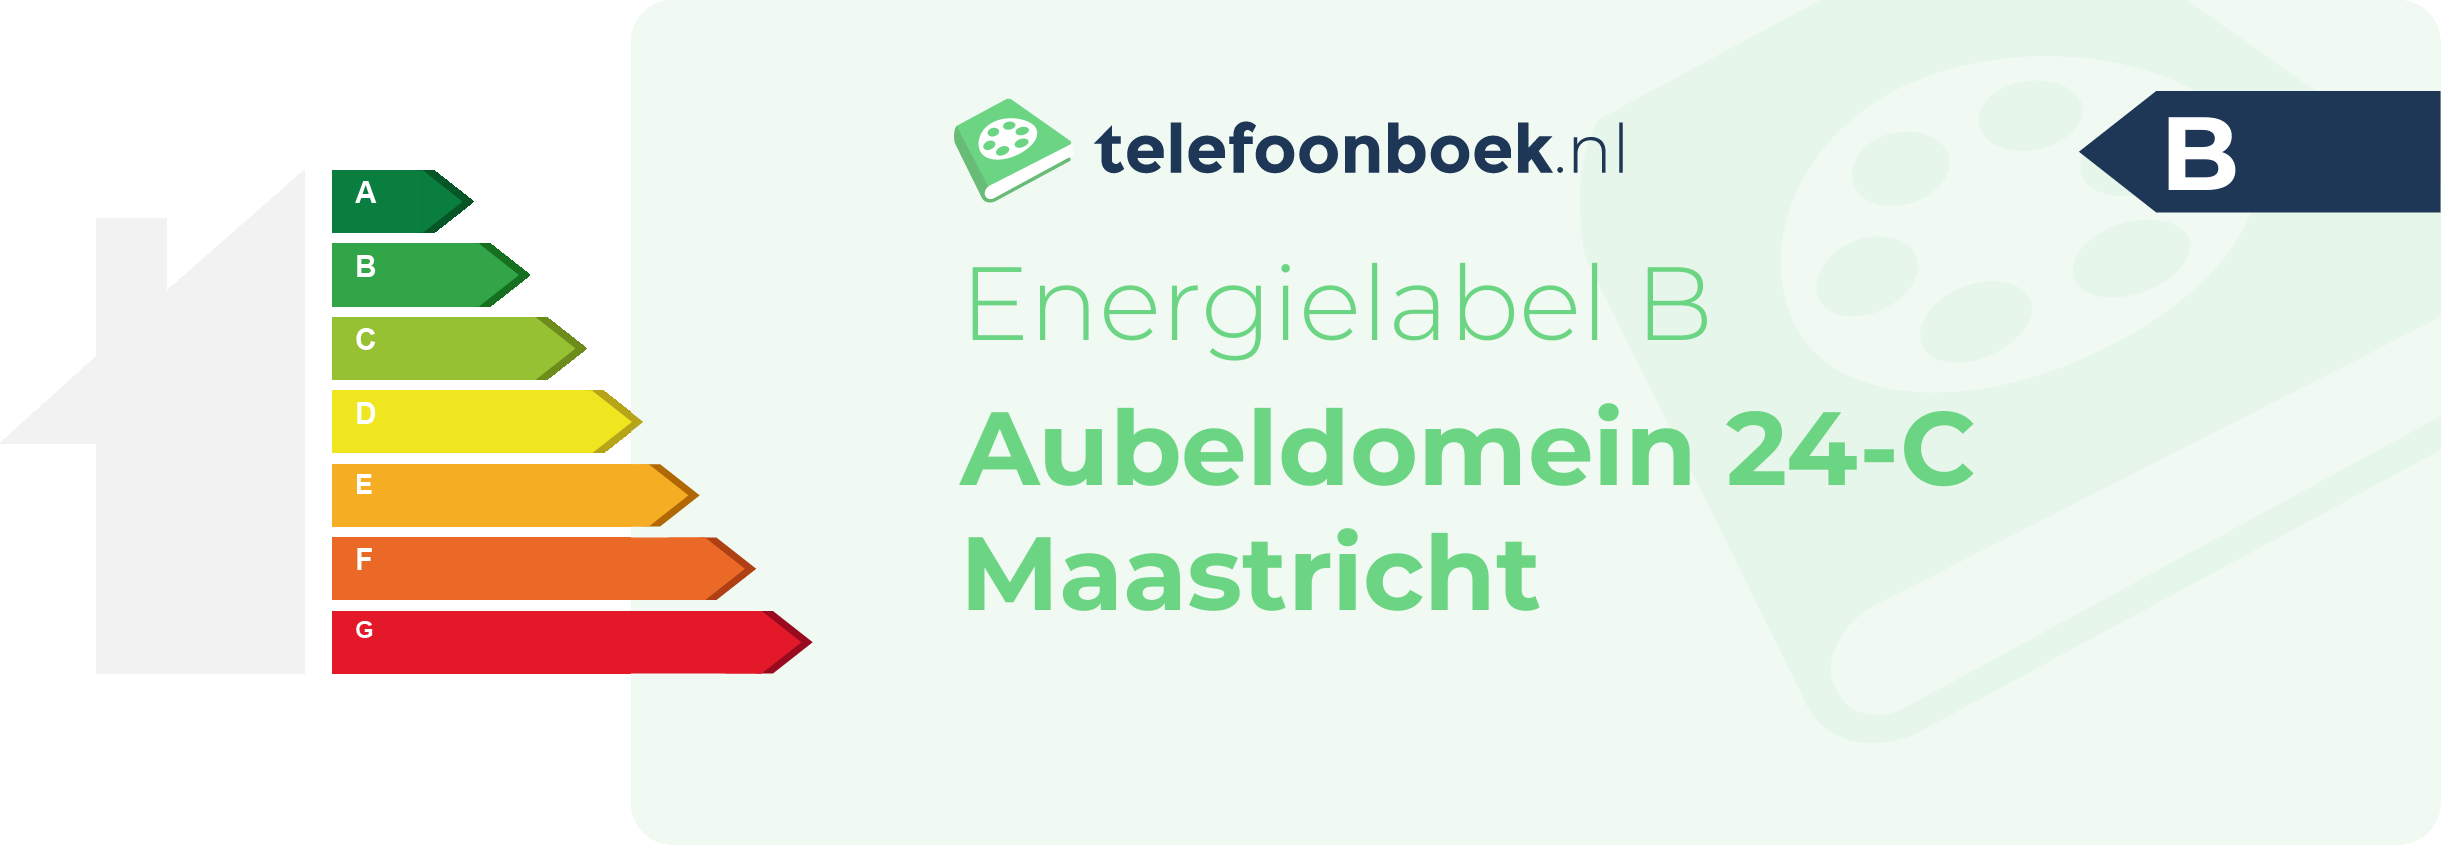 Energielabel Aubeldomein 24-C Maastricht